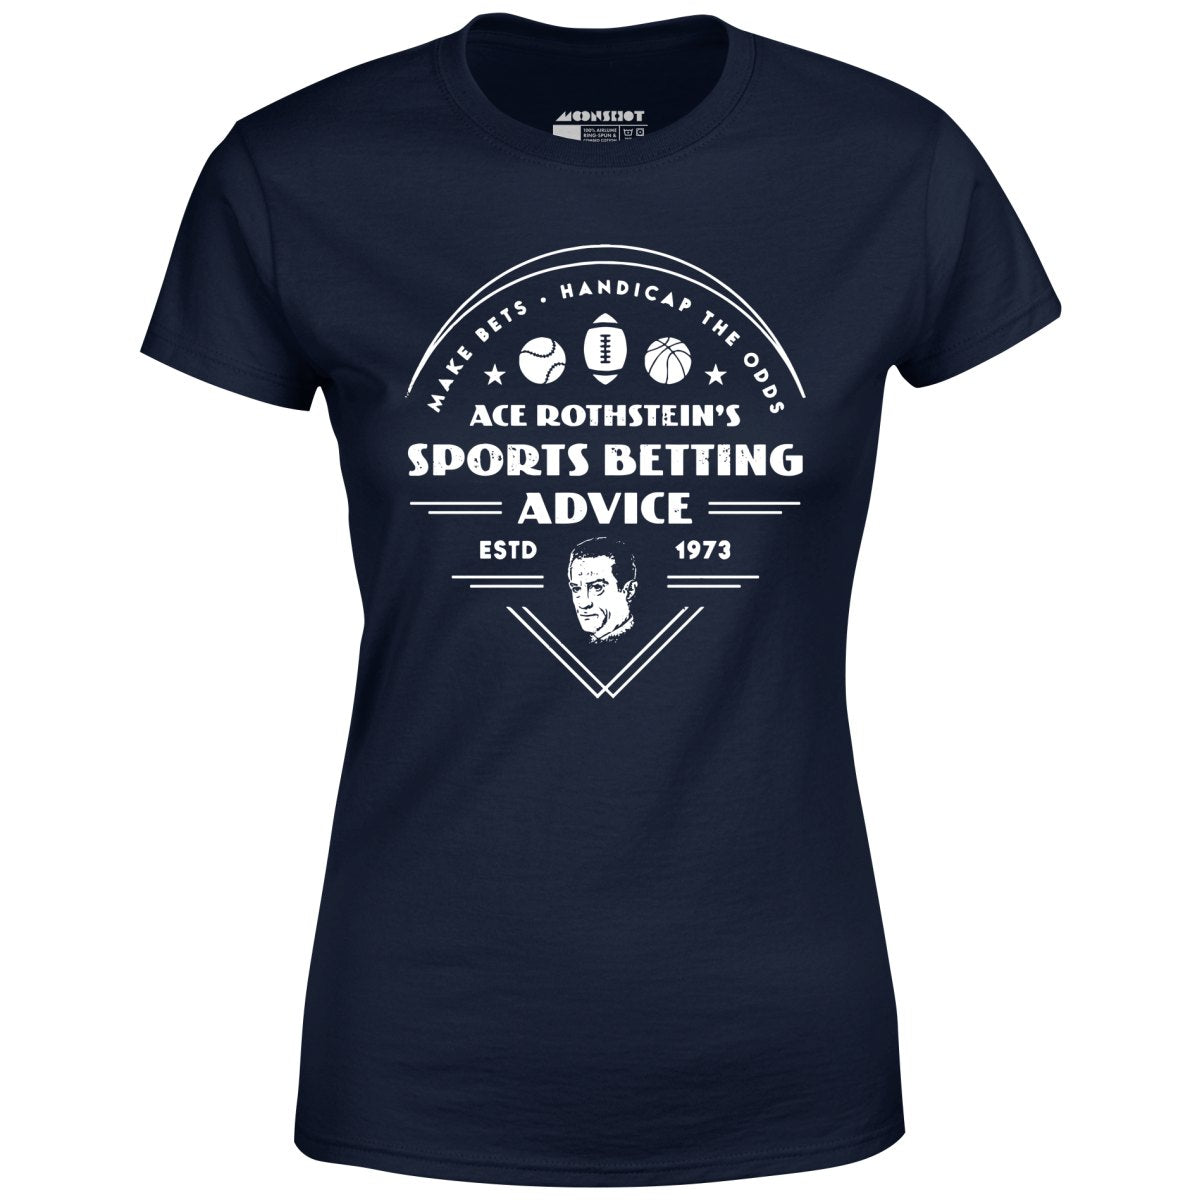 Ace Rothstein's Sports Betting Advice - Women's T-Shirt